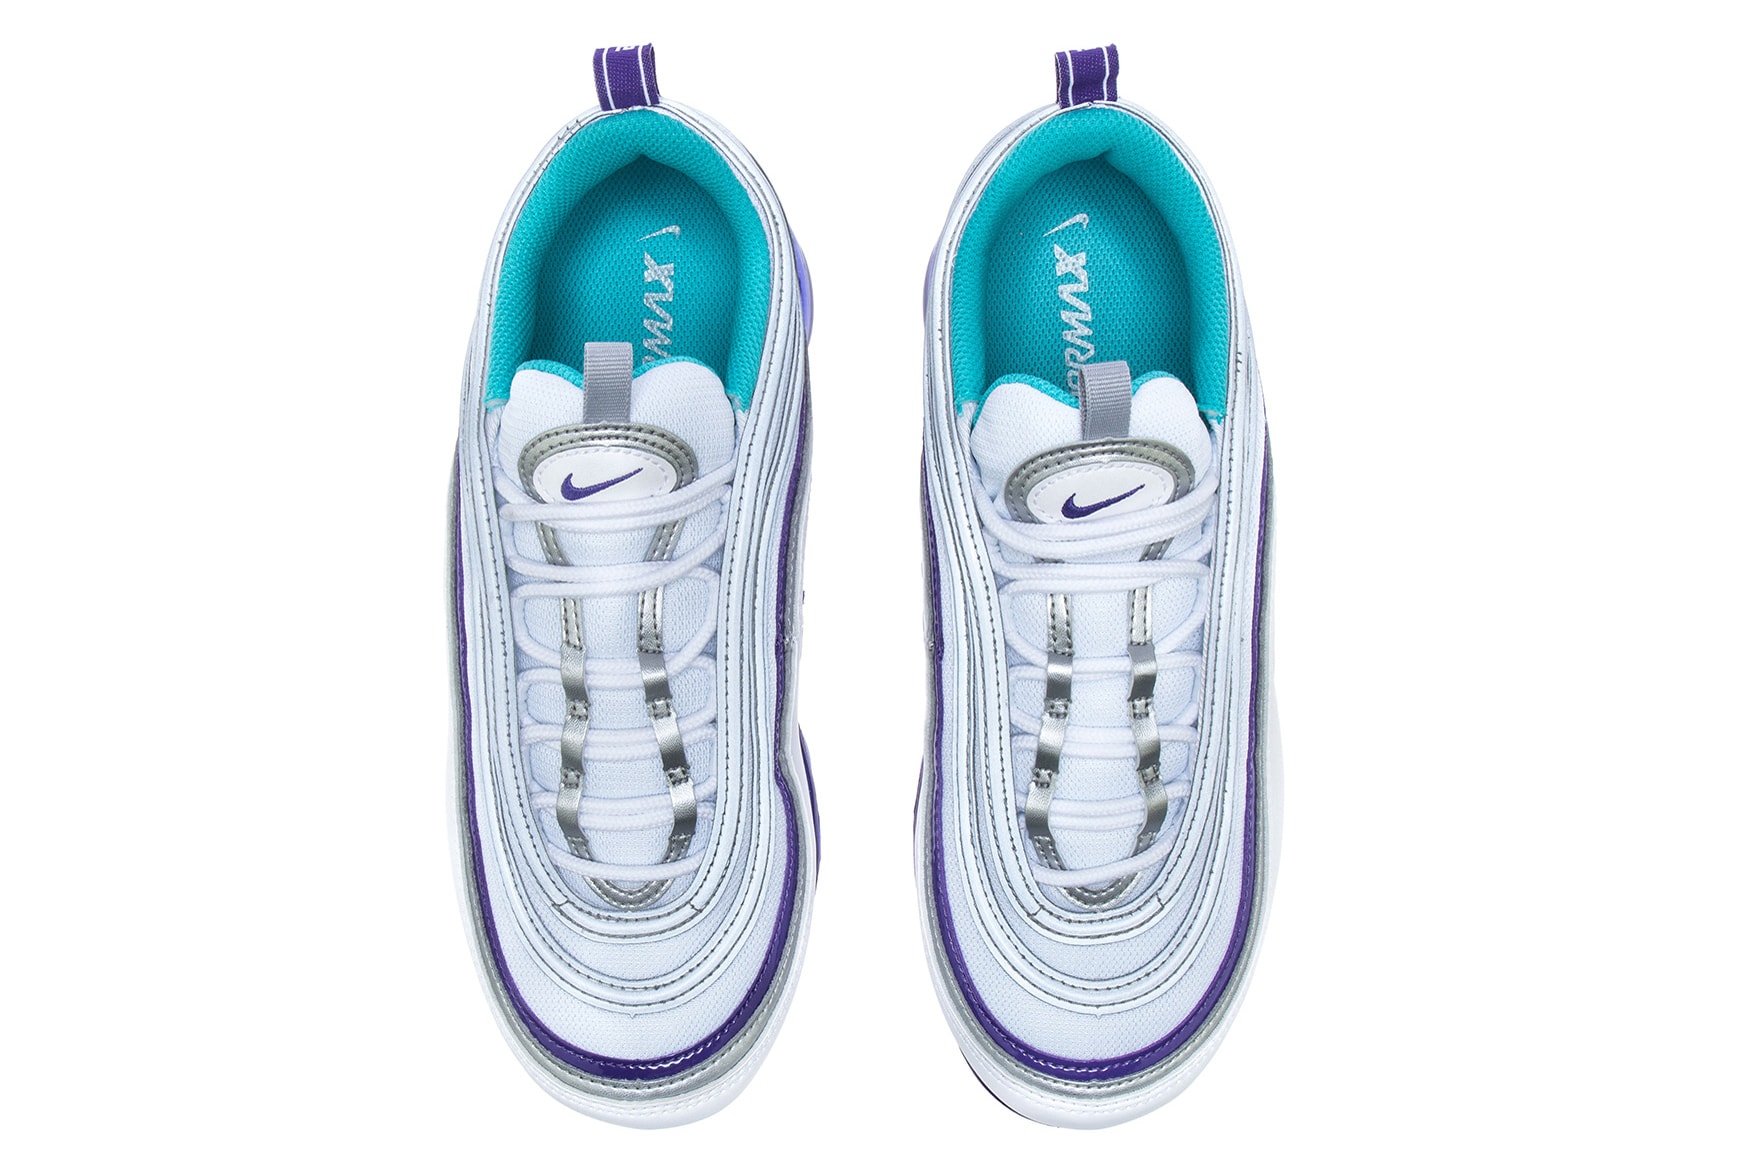 Nike Air Vapormax 97 推出全新「Grape/Aqua」配色設計